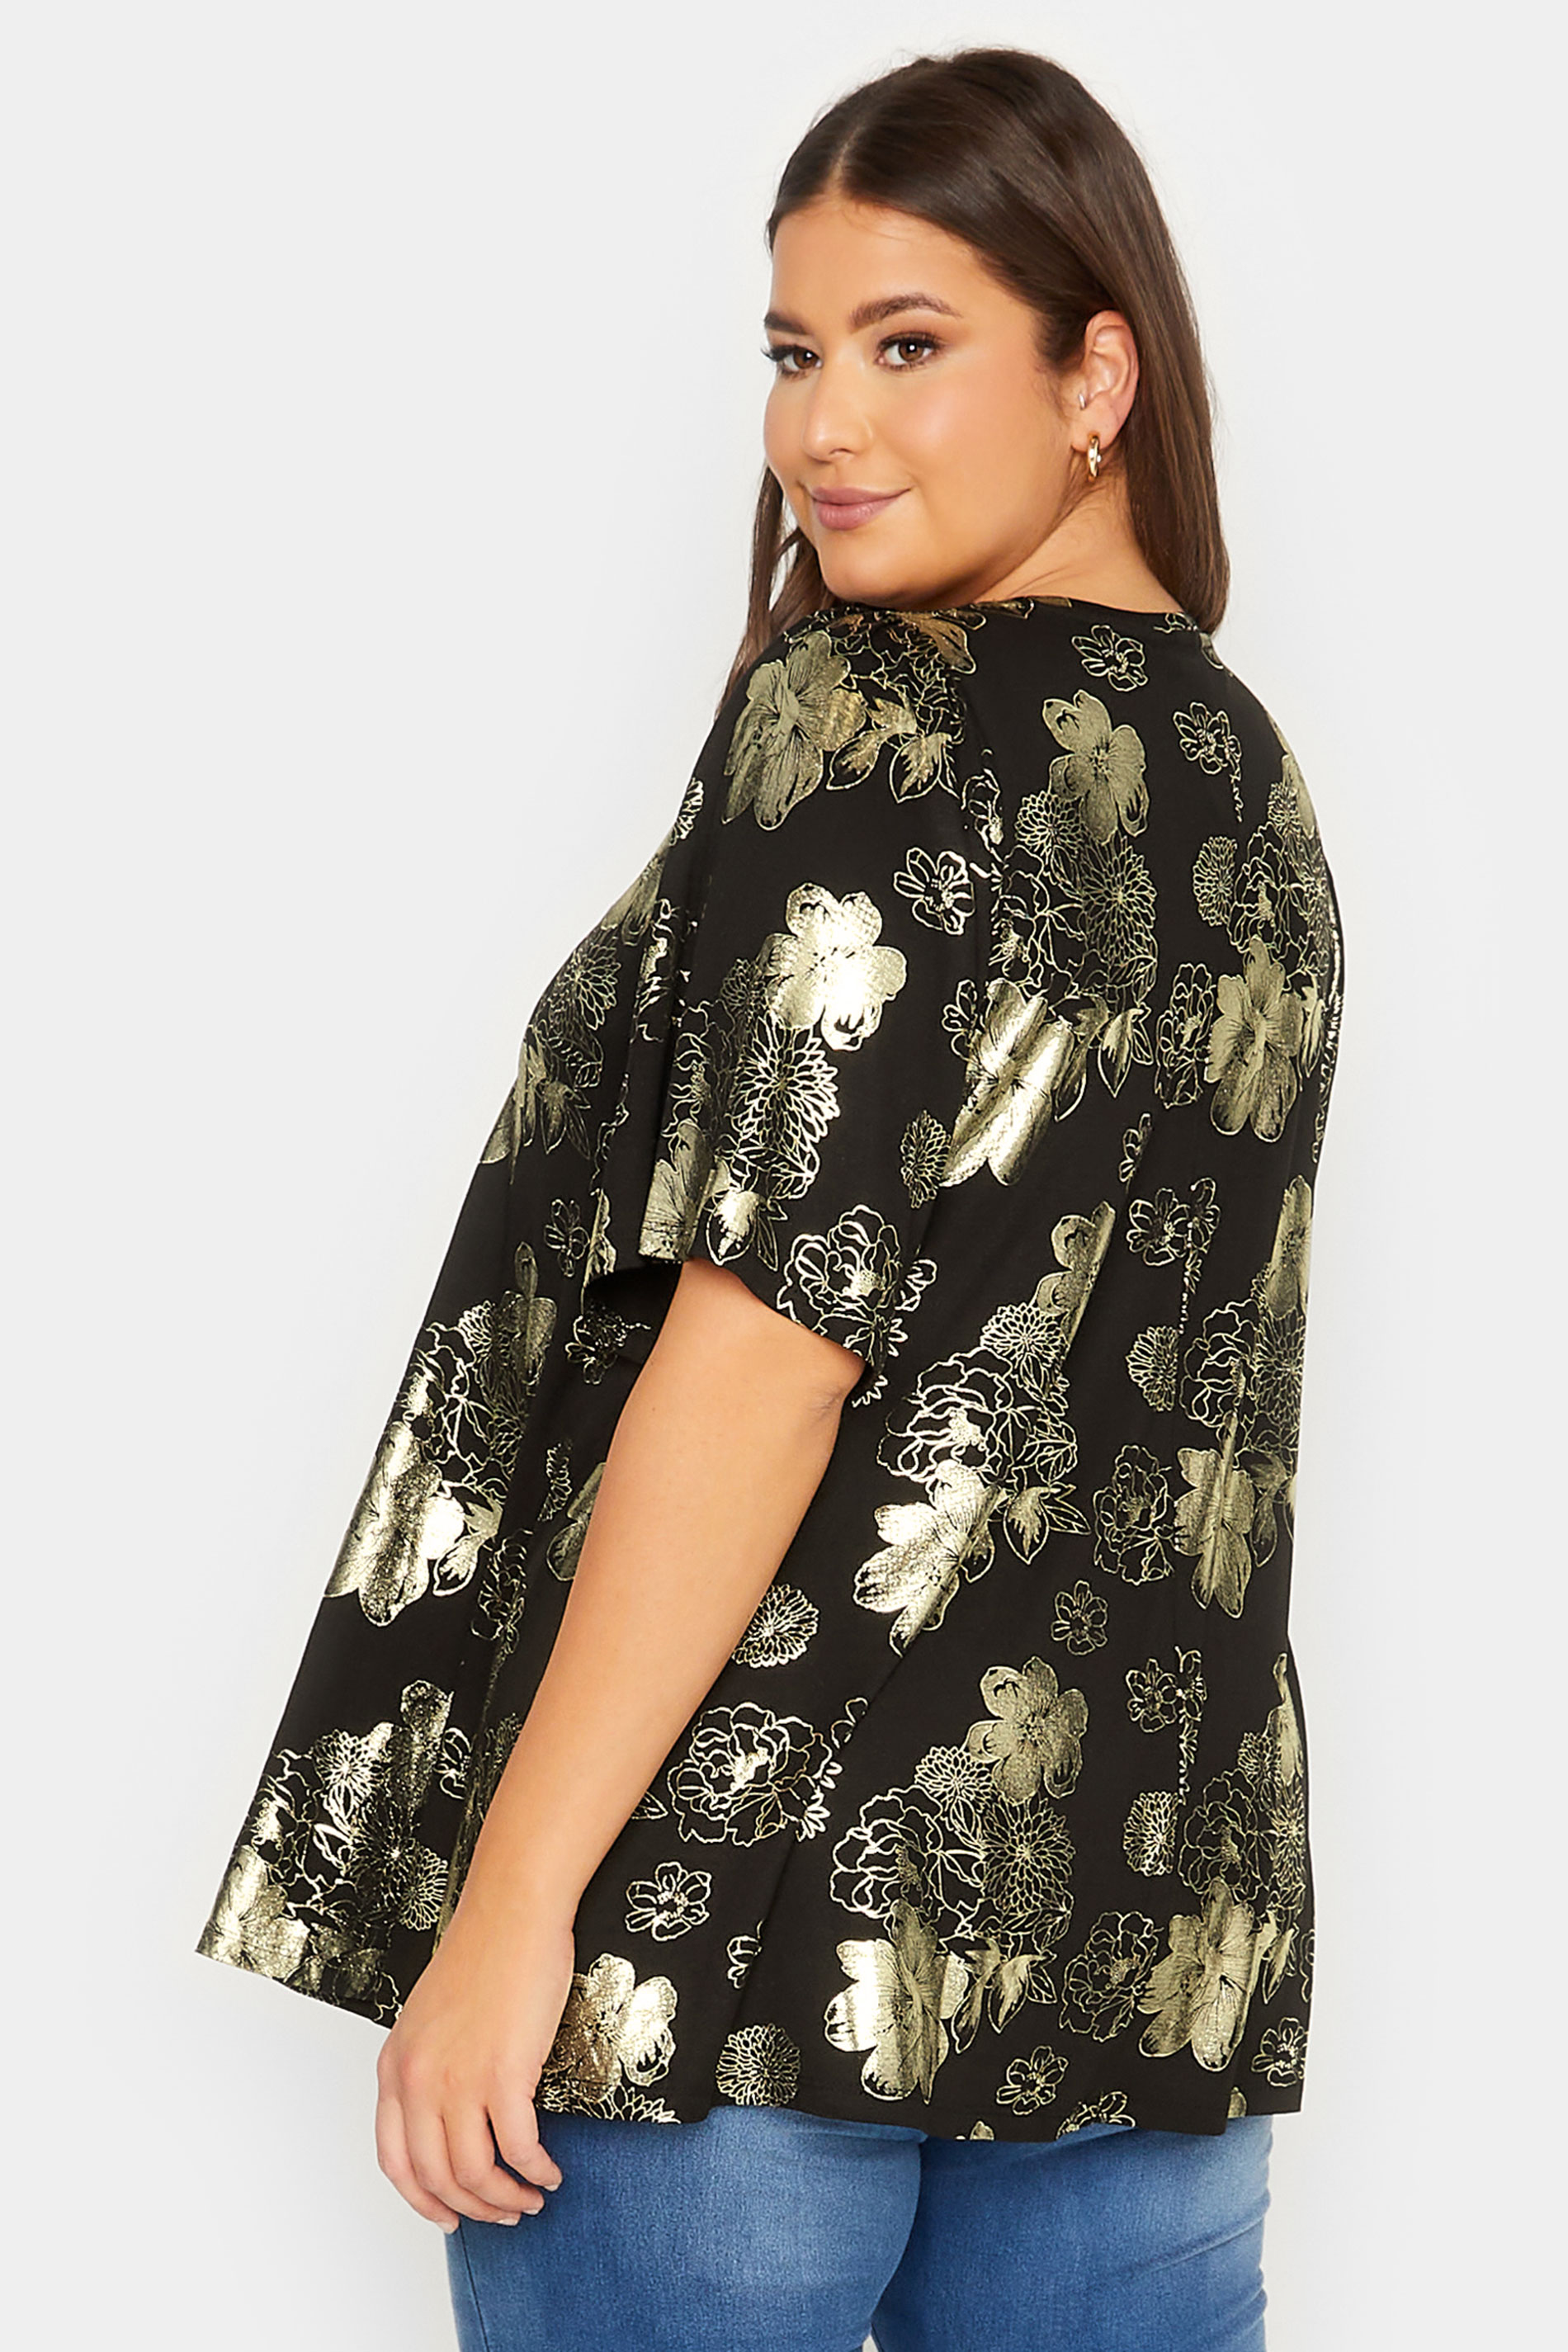 YOURS LUXURY Plus Size Curve Black Floral Foil Print Top | Yours Clothing  3